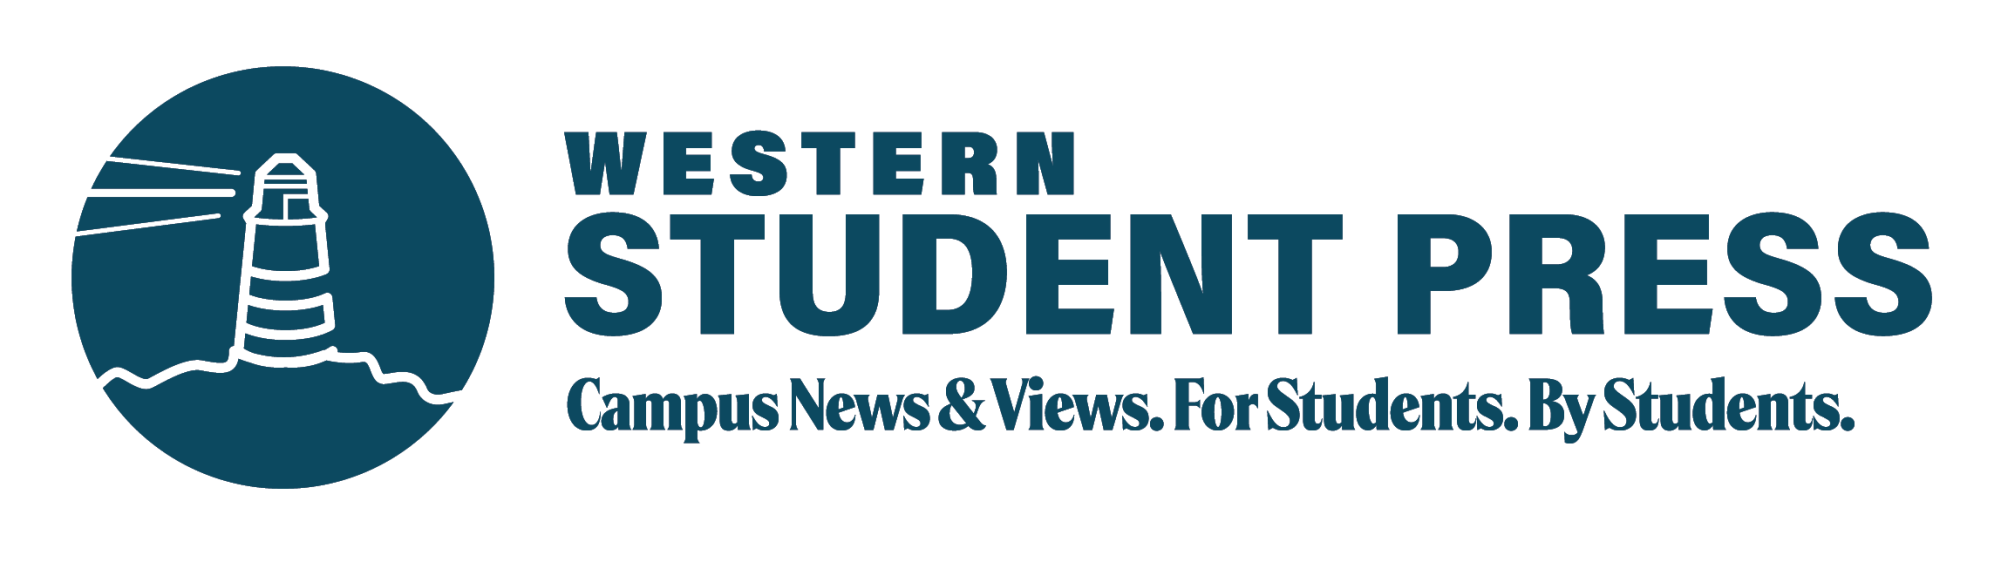 Campus News & Views